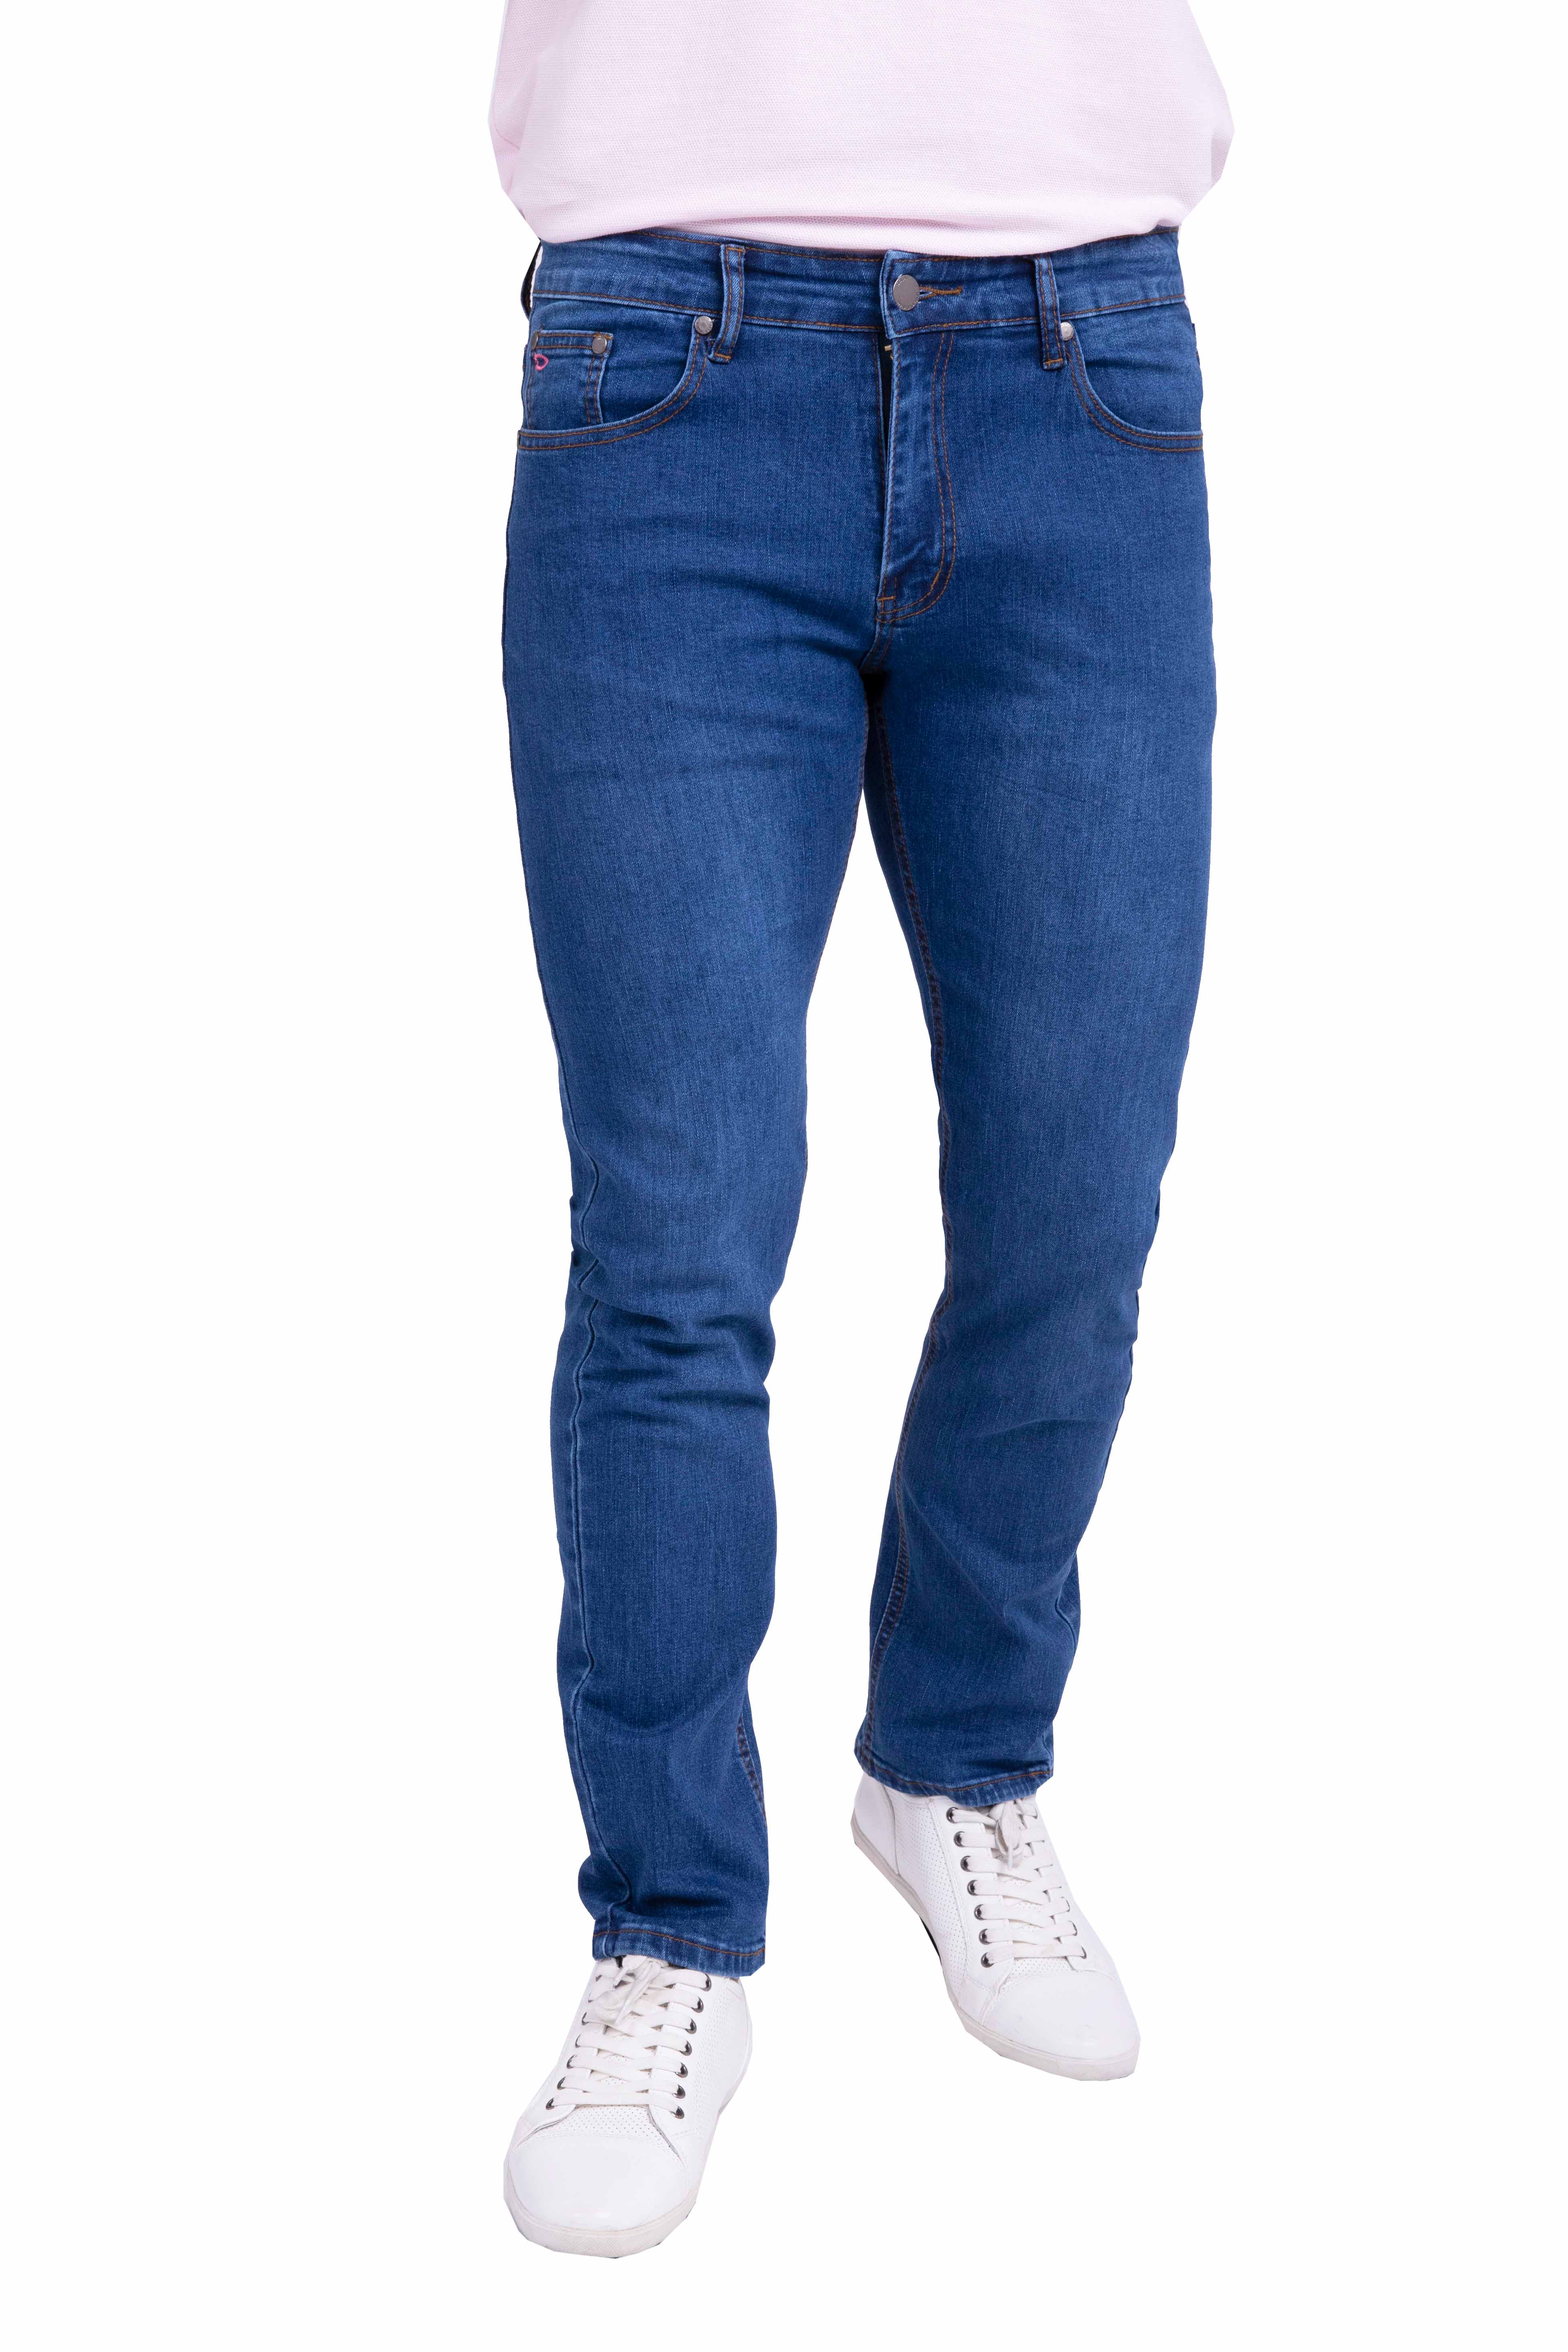 pantalones-jeans-oscar-p-caballeros